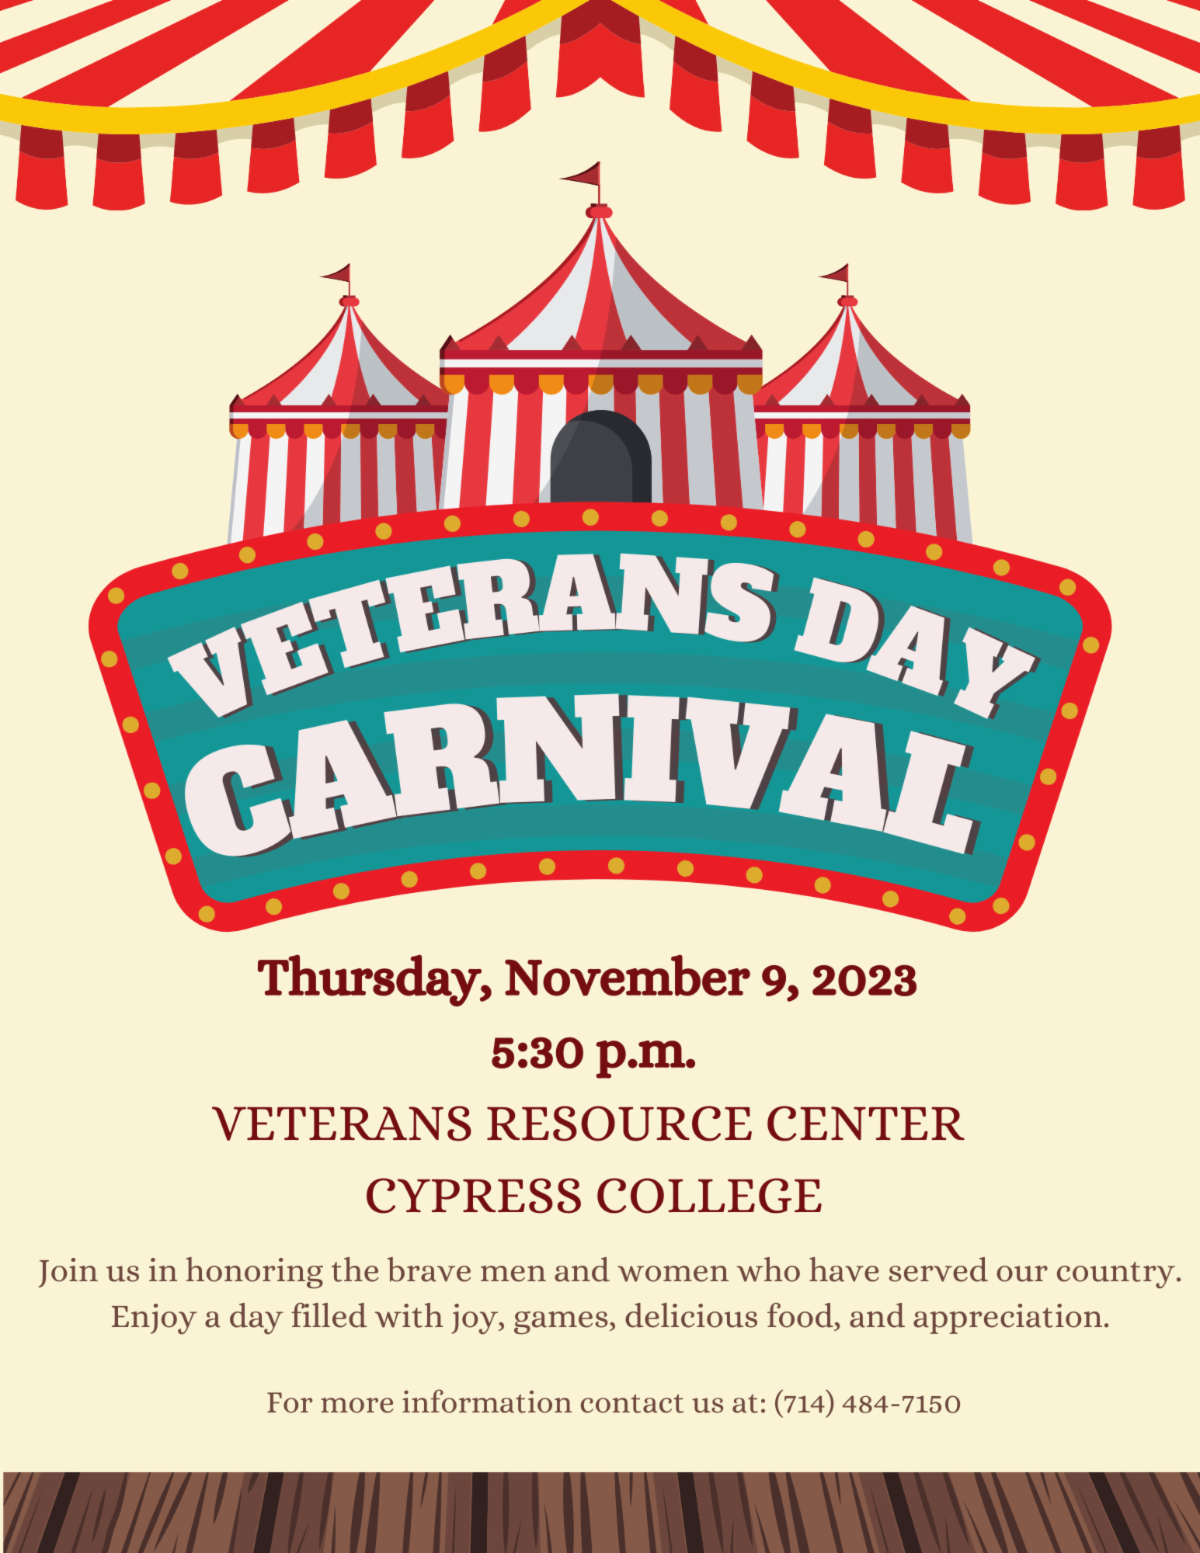 Veterans Day Carnival event flyer